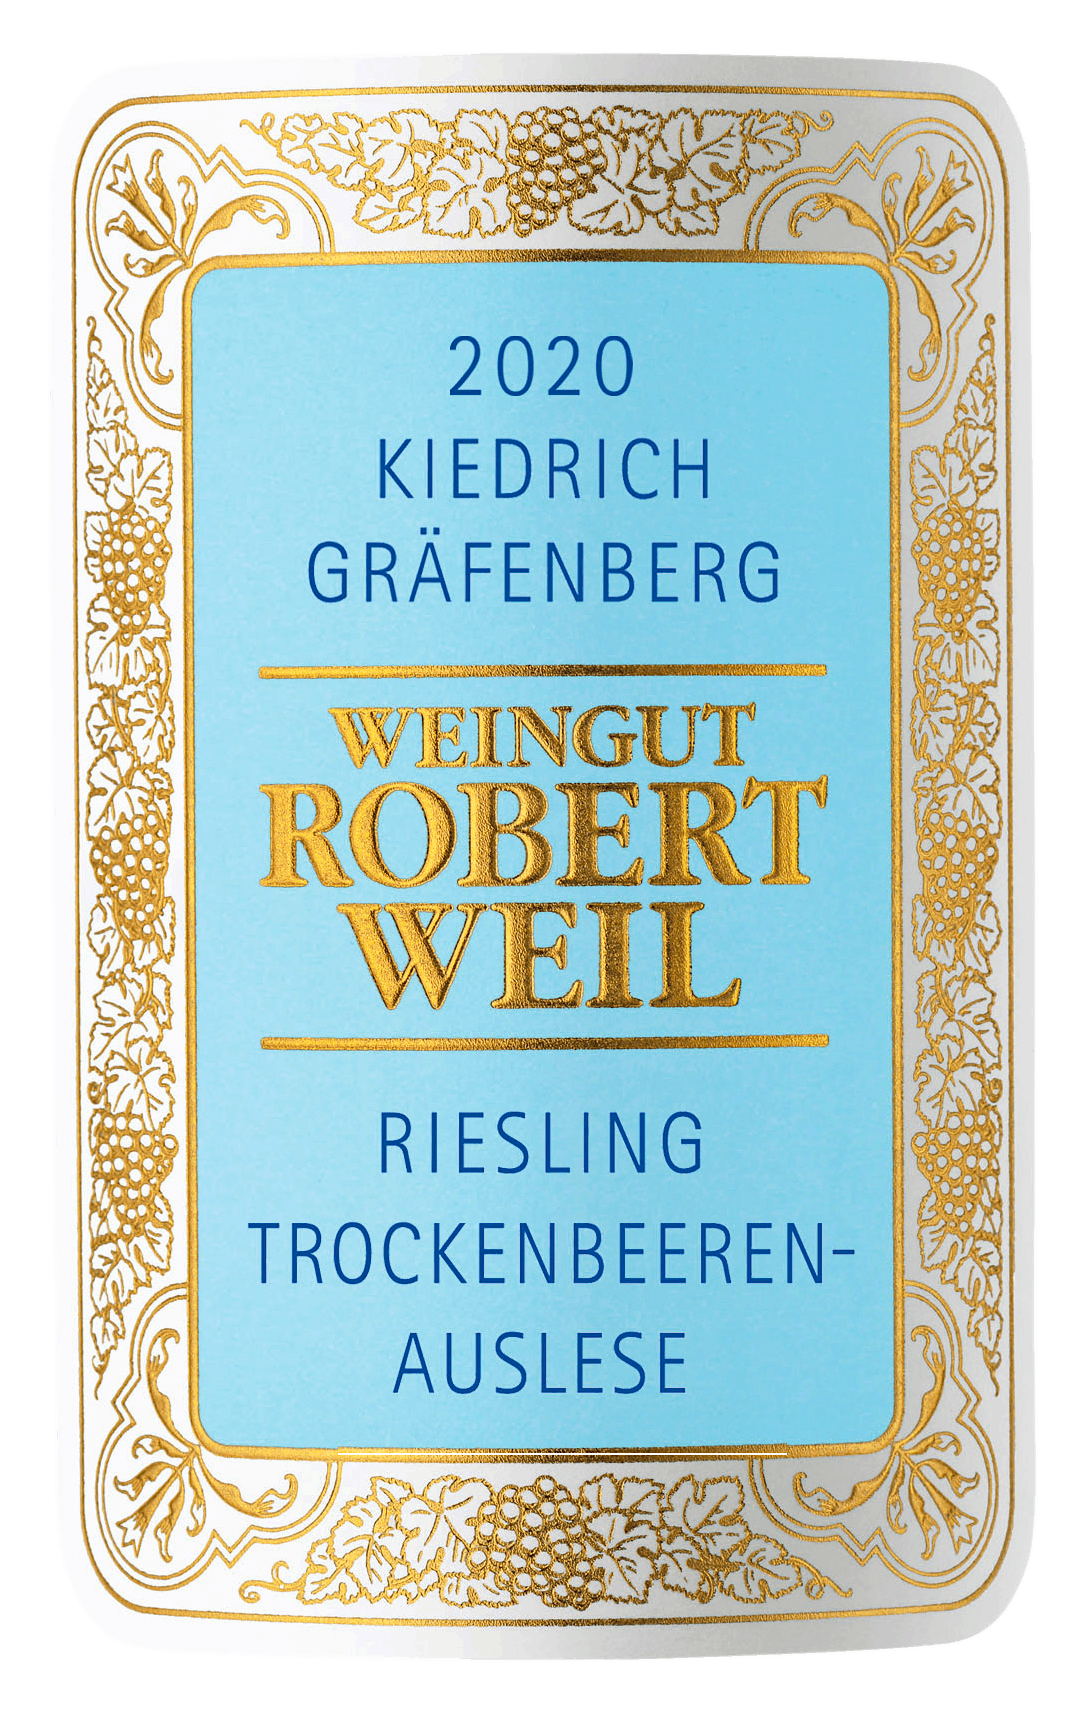 Label for Robert Weil